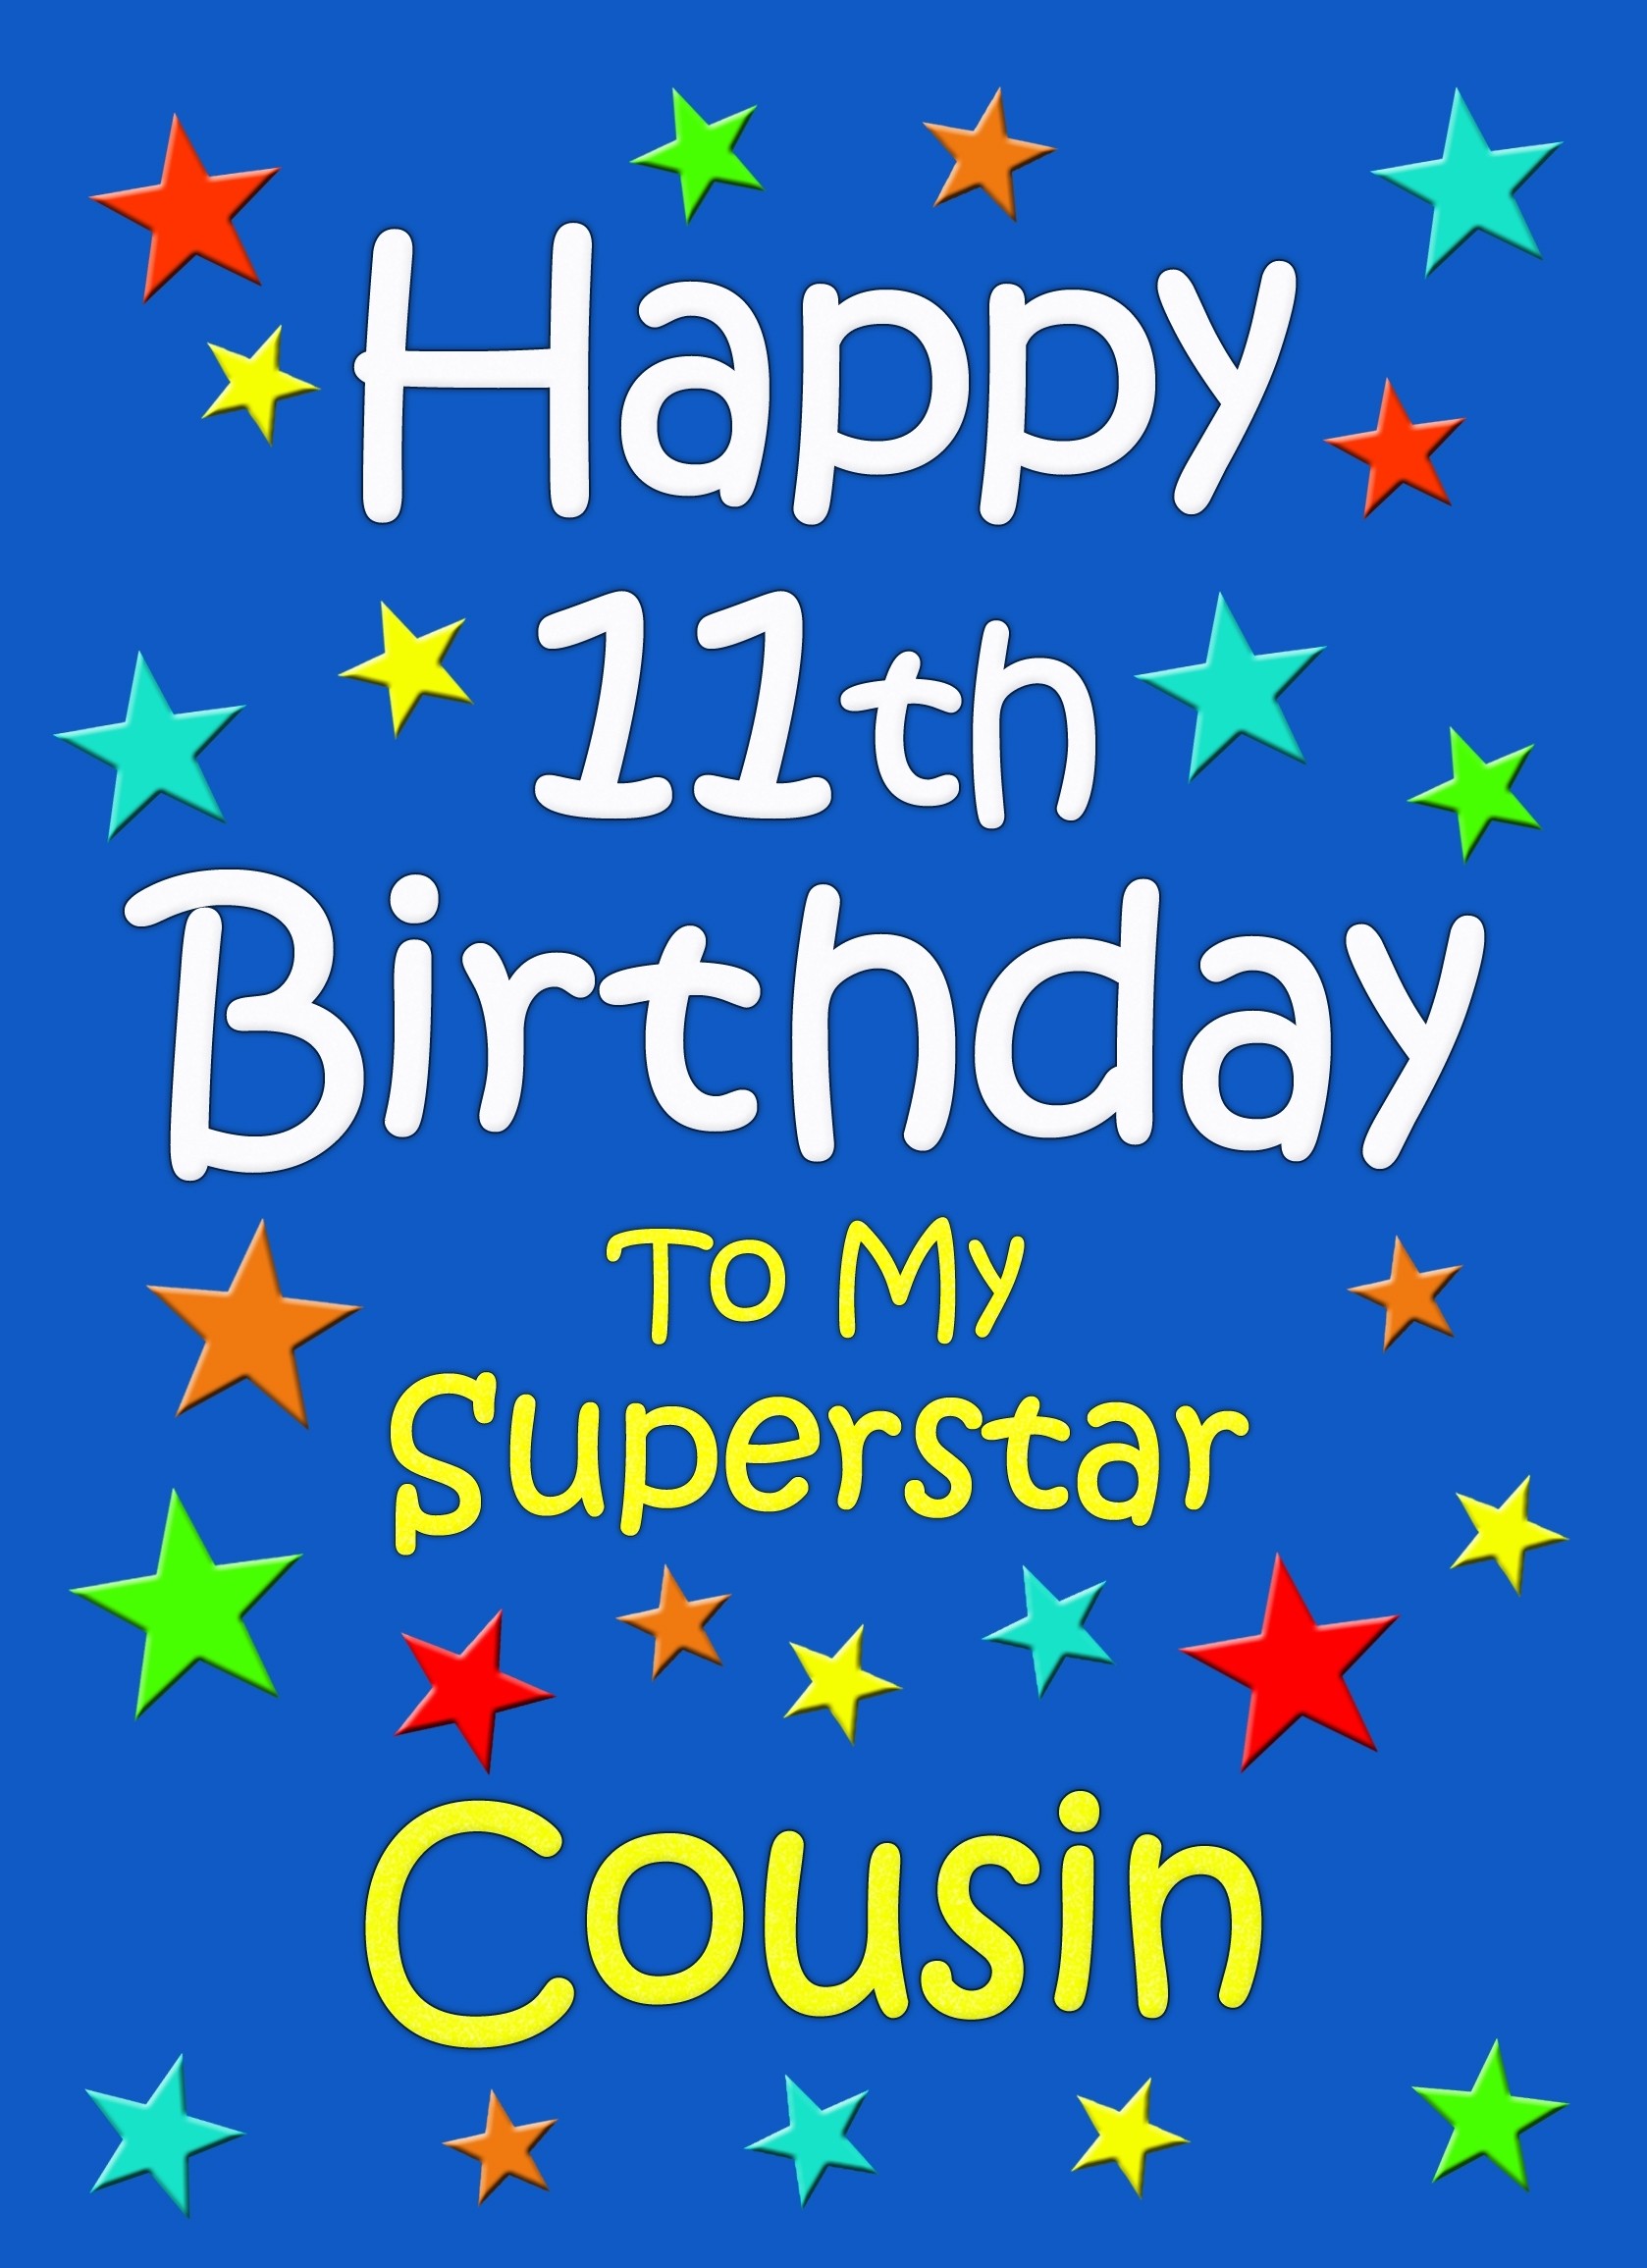 Cousin 11th Birthday Card (Blue)